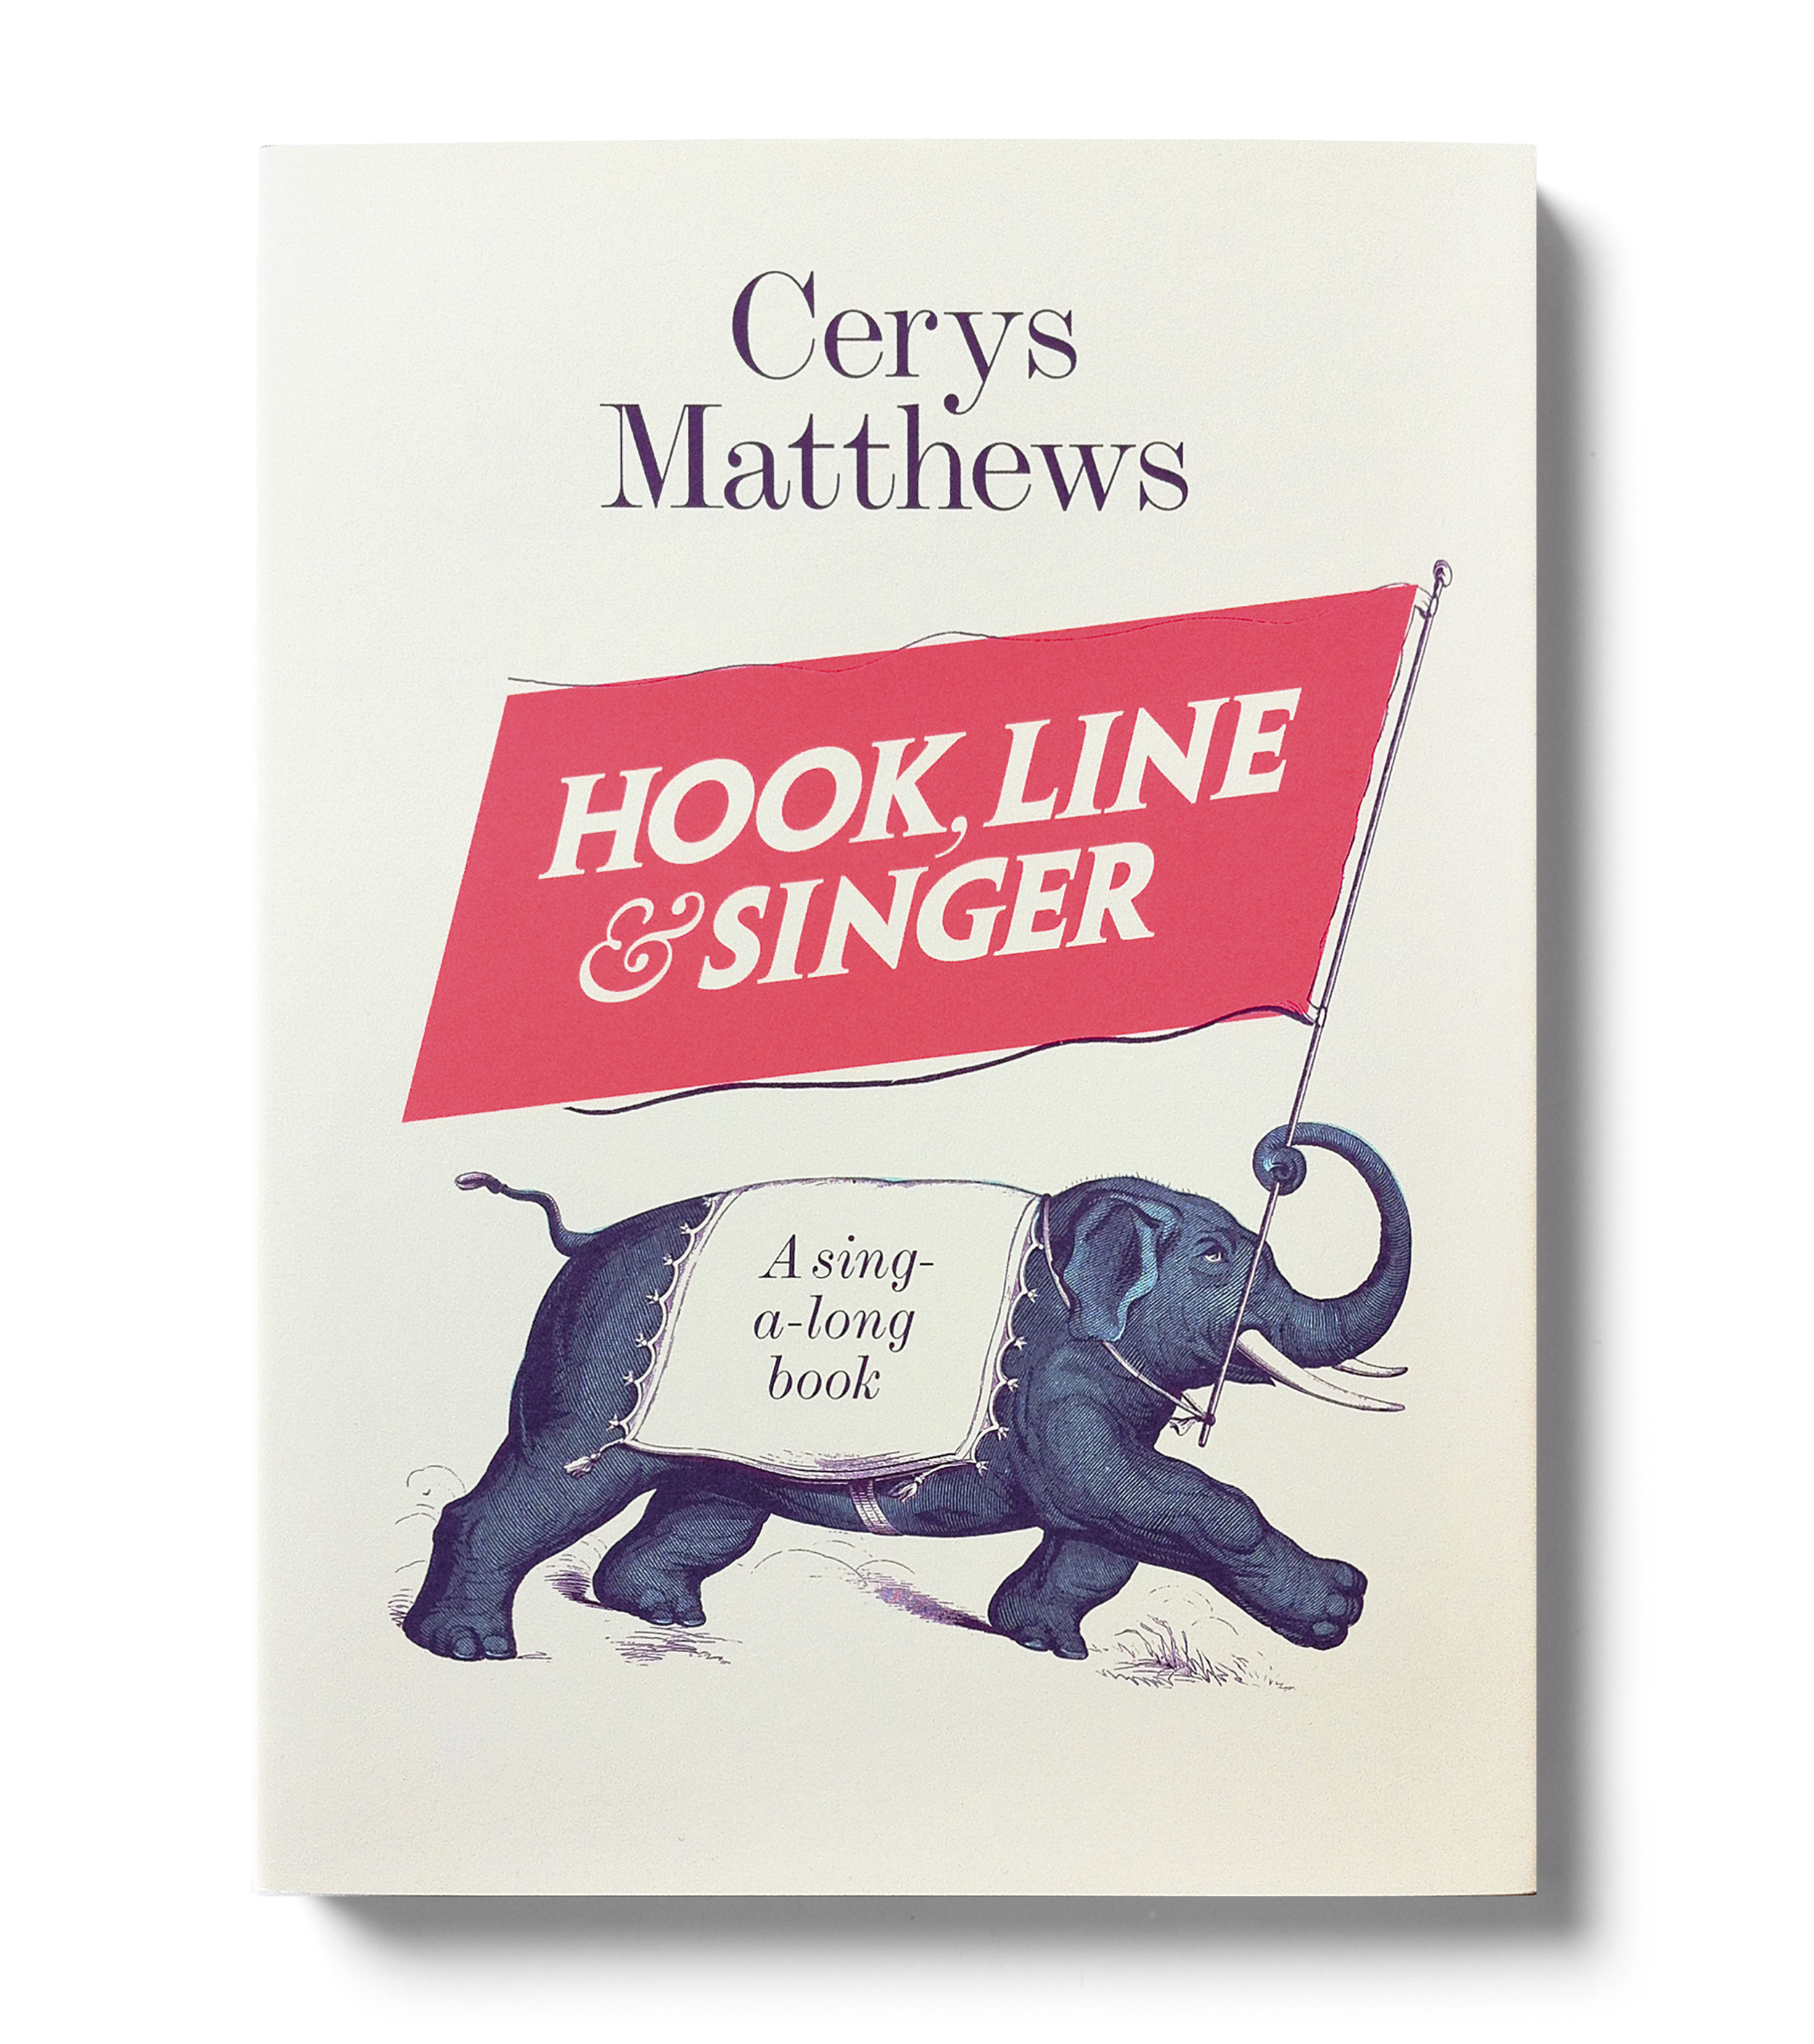  Hook, Line &amp; Singer by Cerys Matthews (hardback edition) - Design: Jim Stoddart  